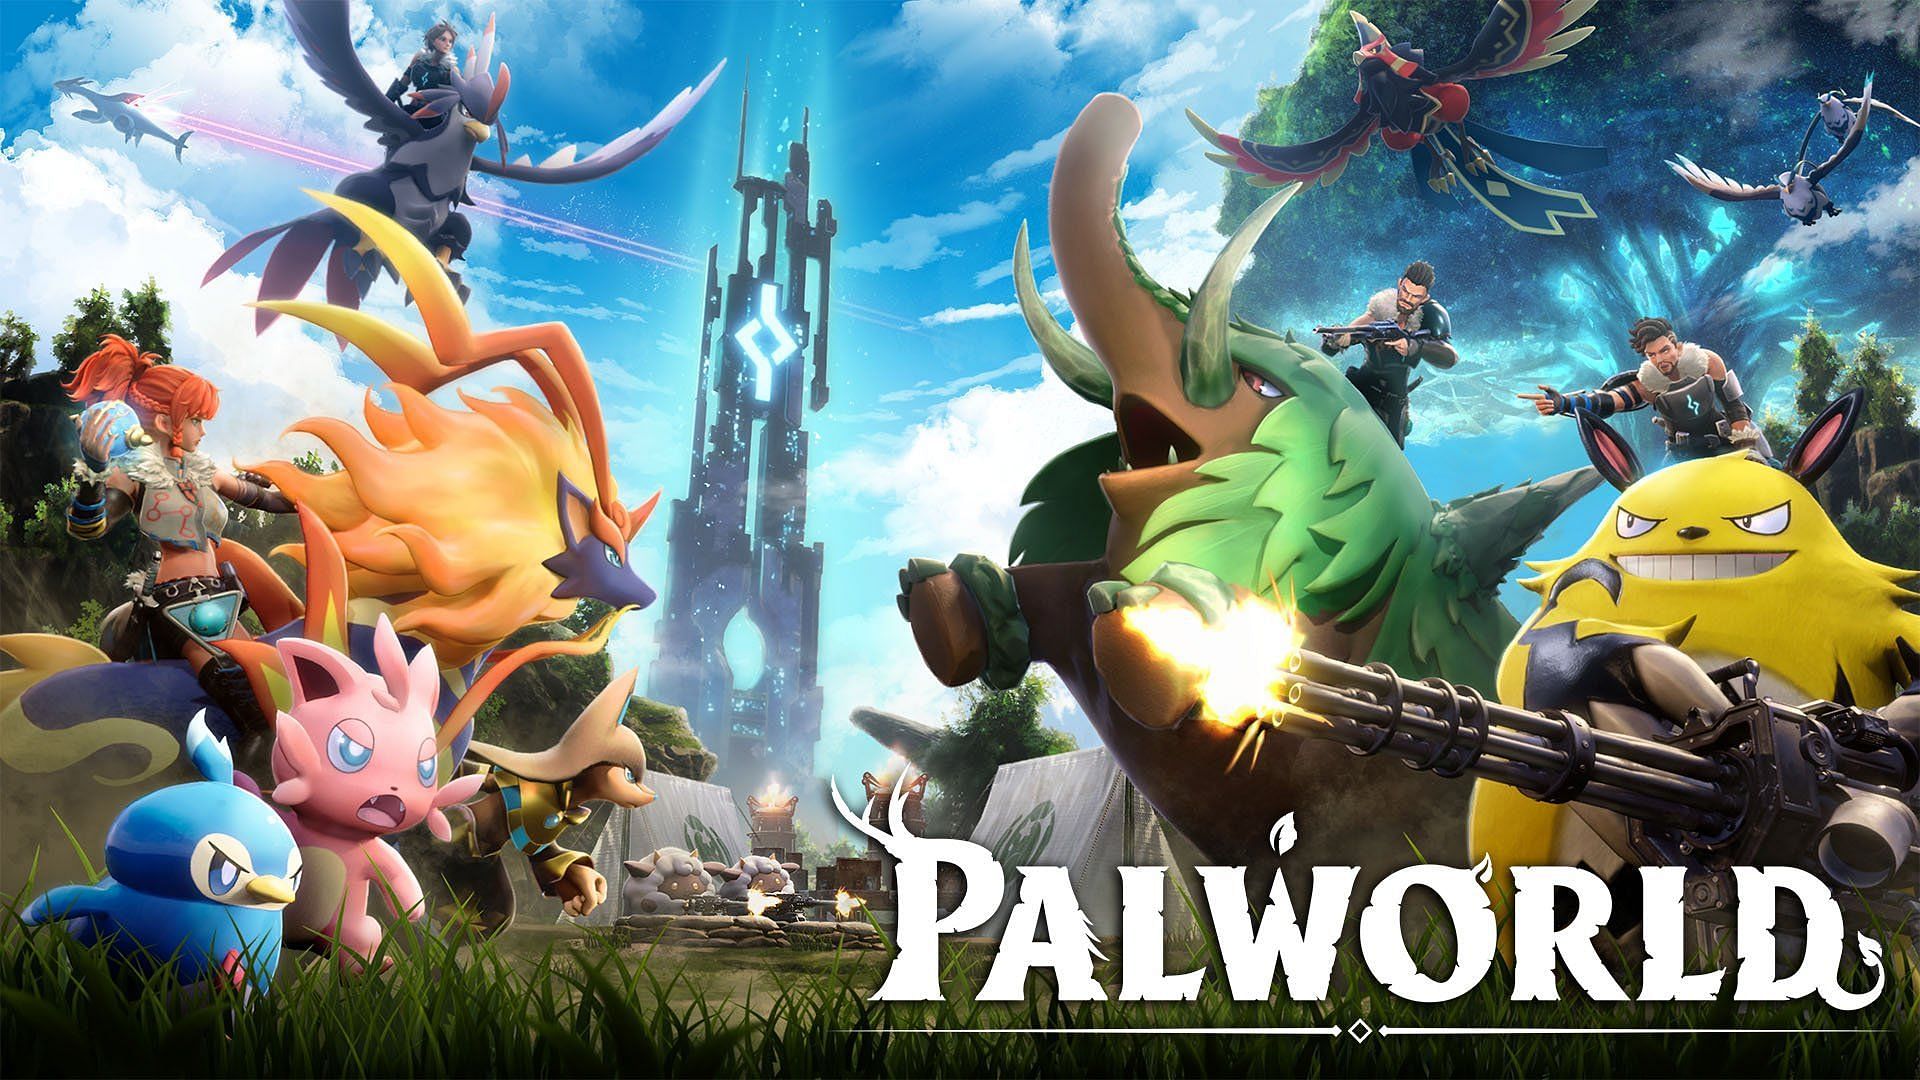 Official artwork for Palworld (Image via Pocket Pair, Inc.)